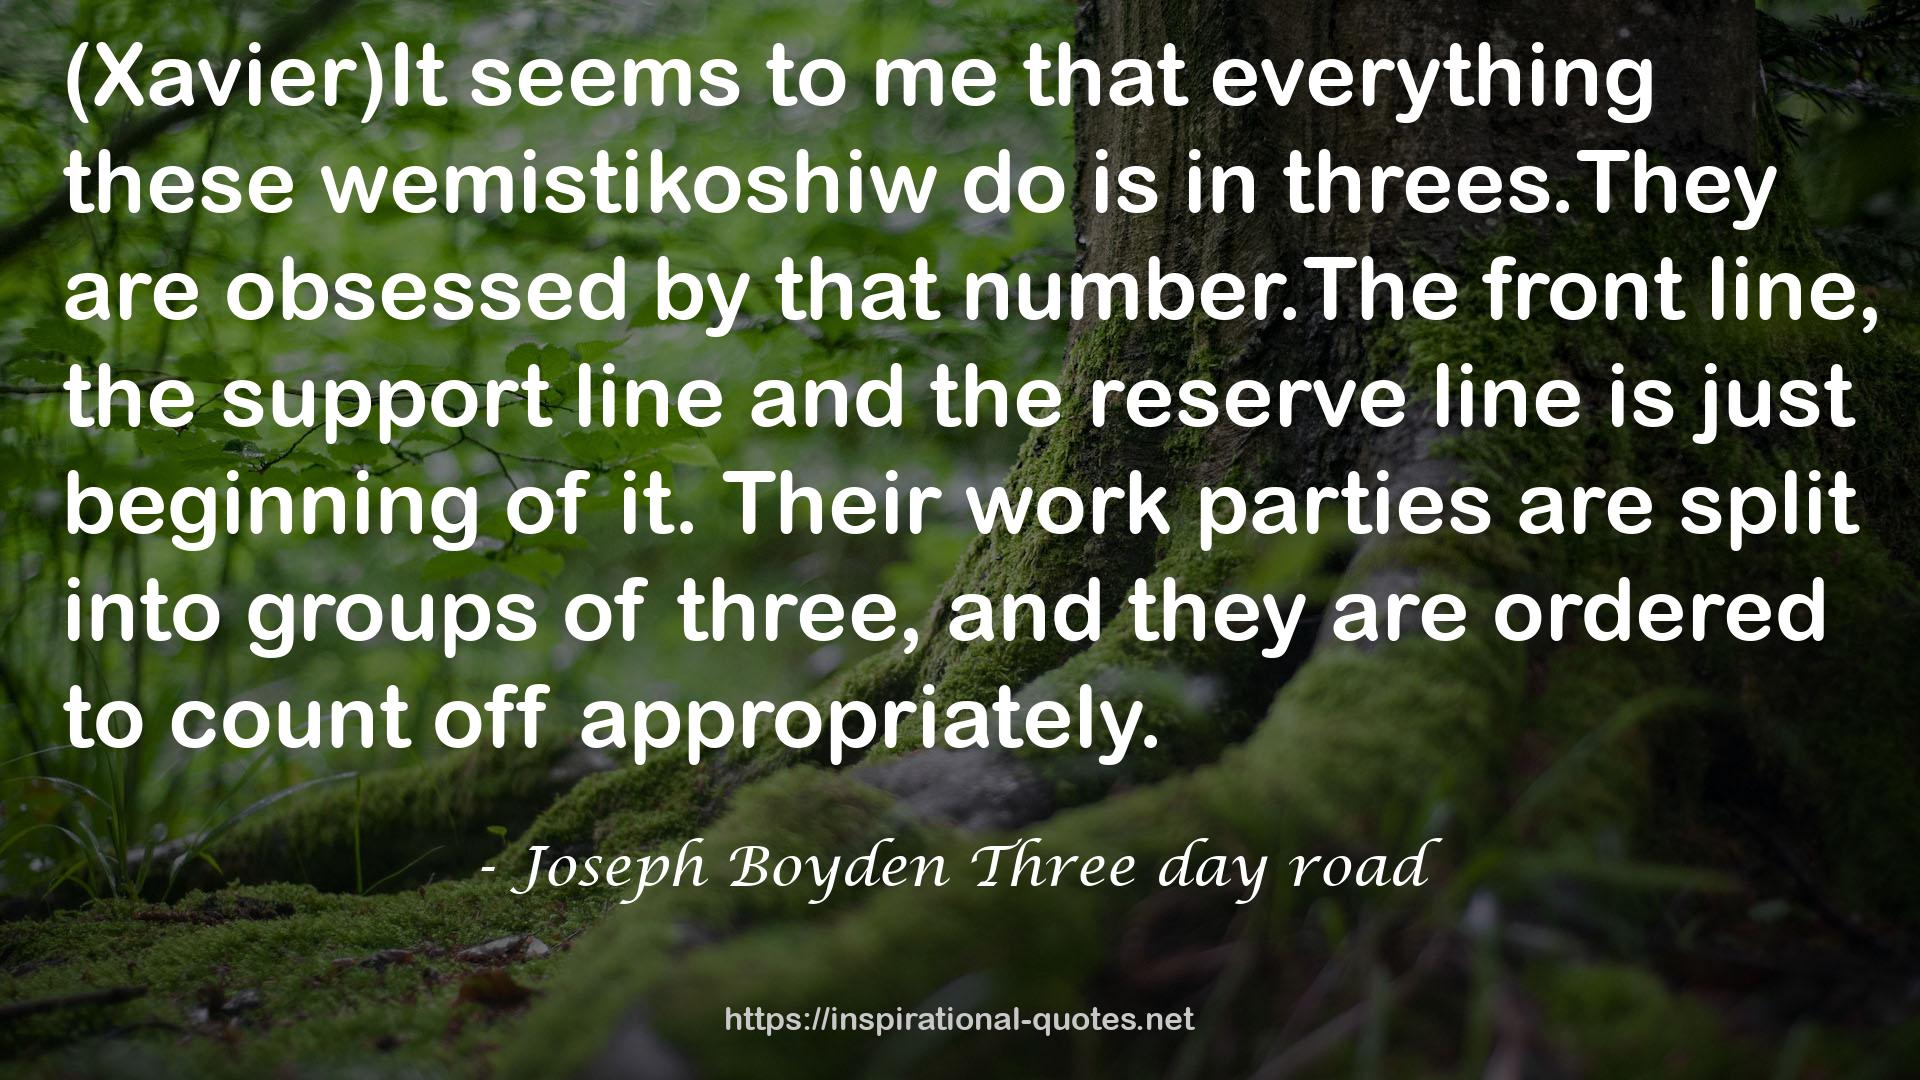 Joseph Boyden Three day road QUOTES